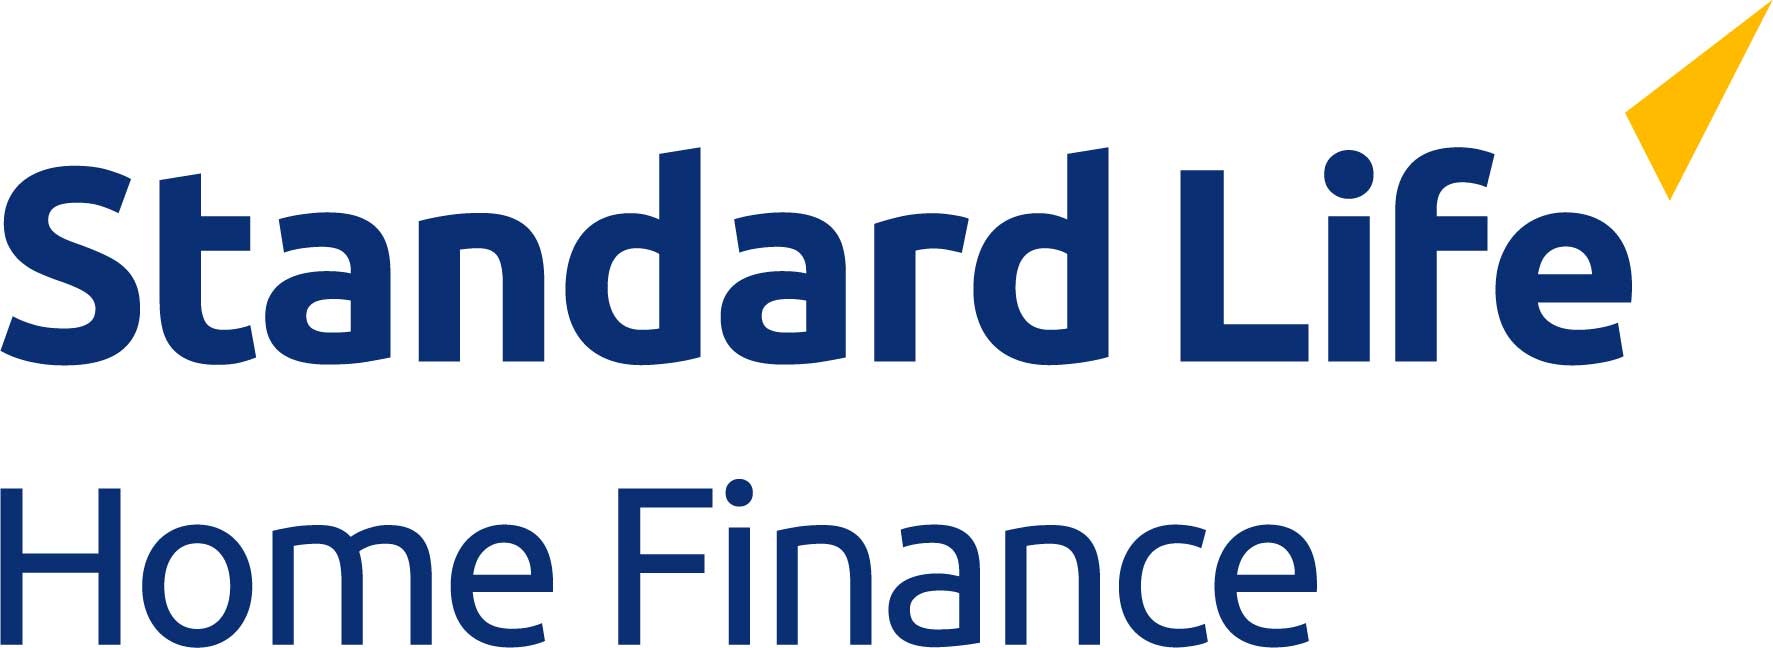 Standard Life Home Finance logo